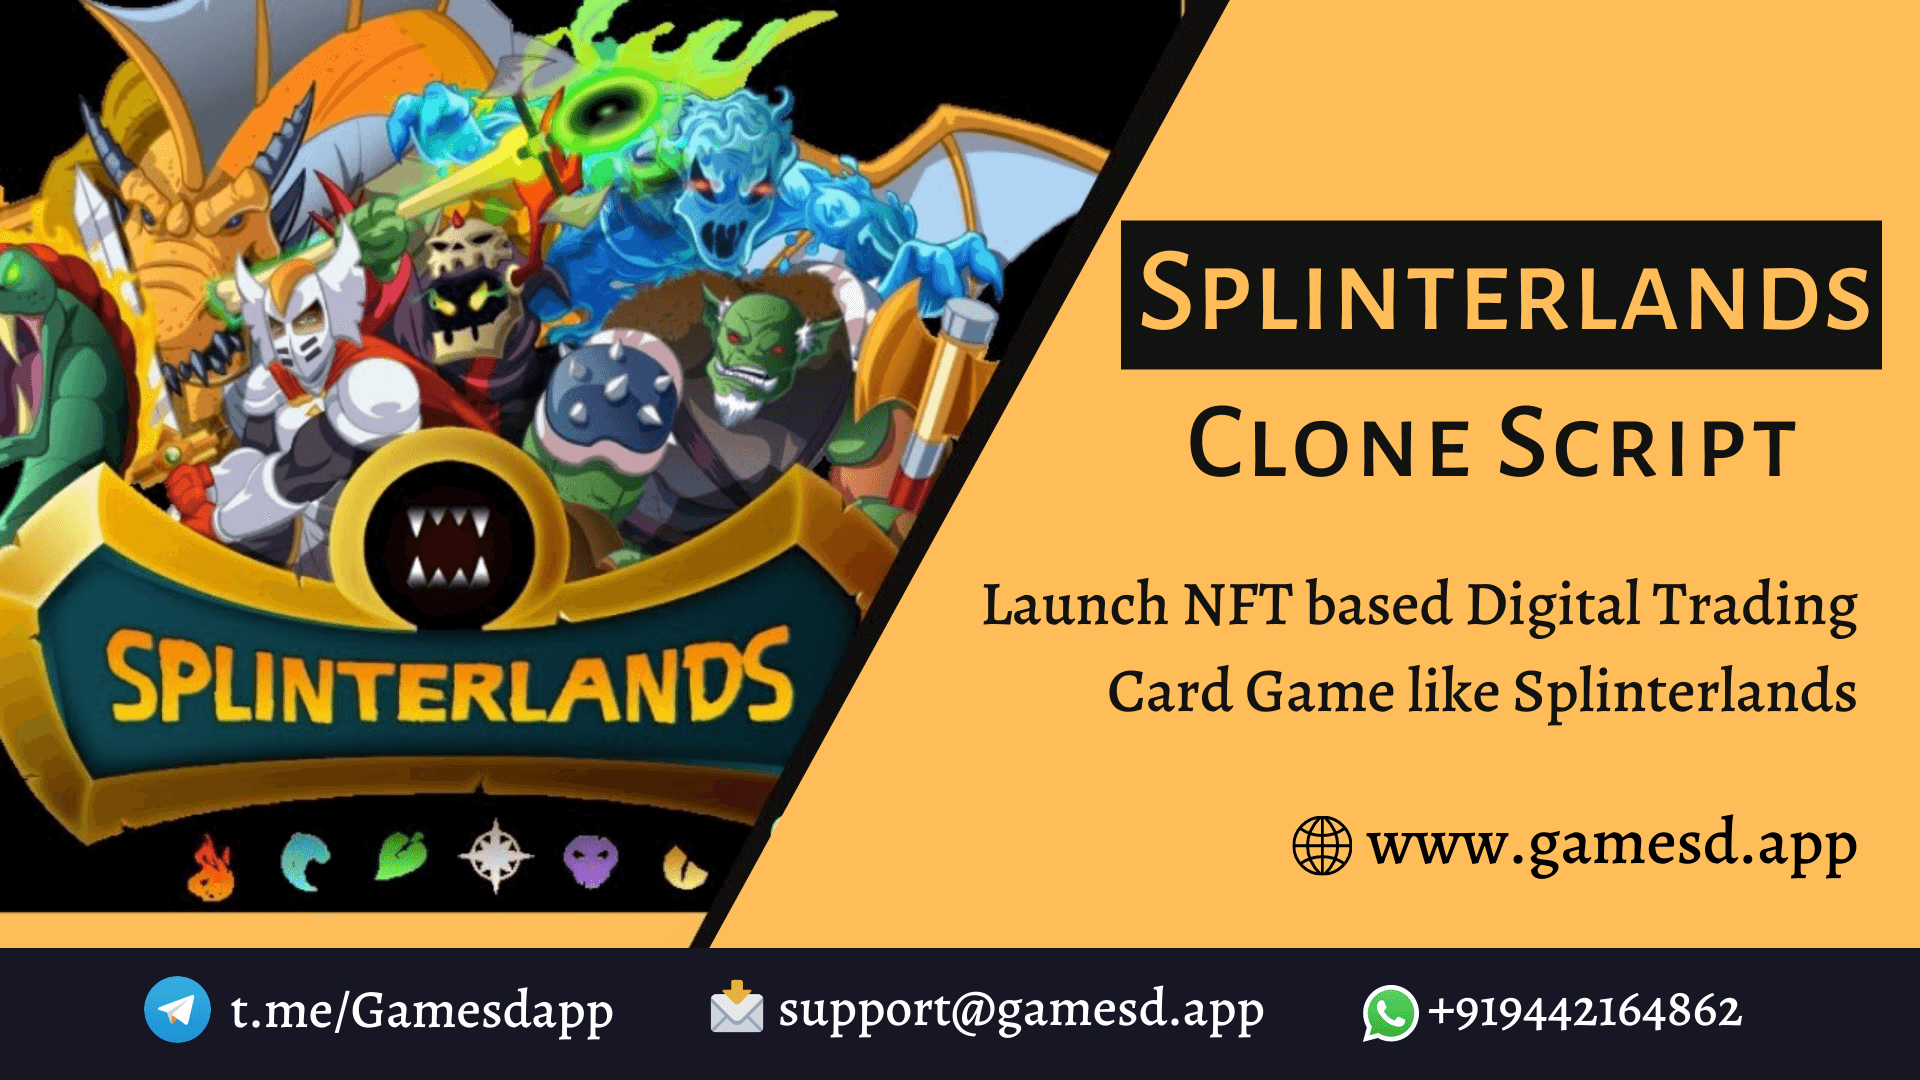 Splinterlands Clone Script To Launch NFT based Digital Trading Card Game on Popular Blockchain Network